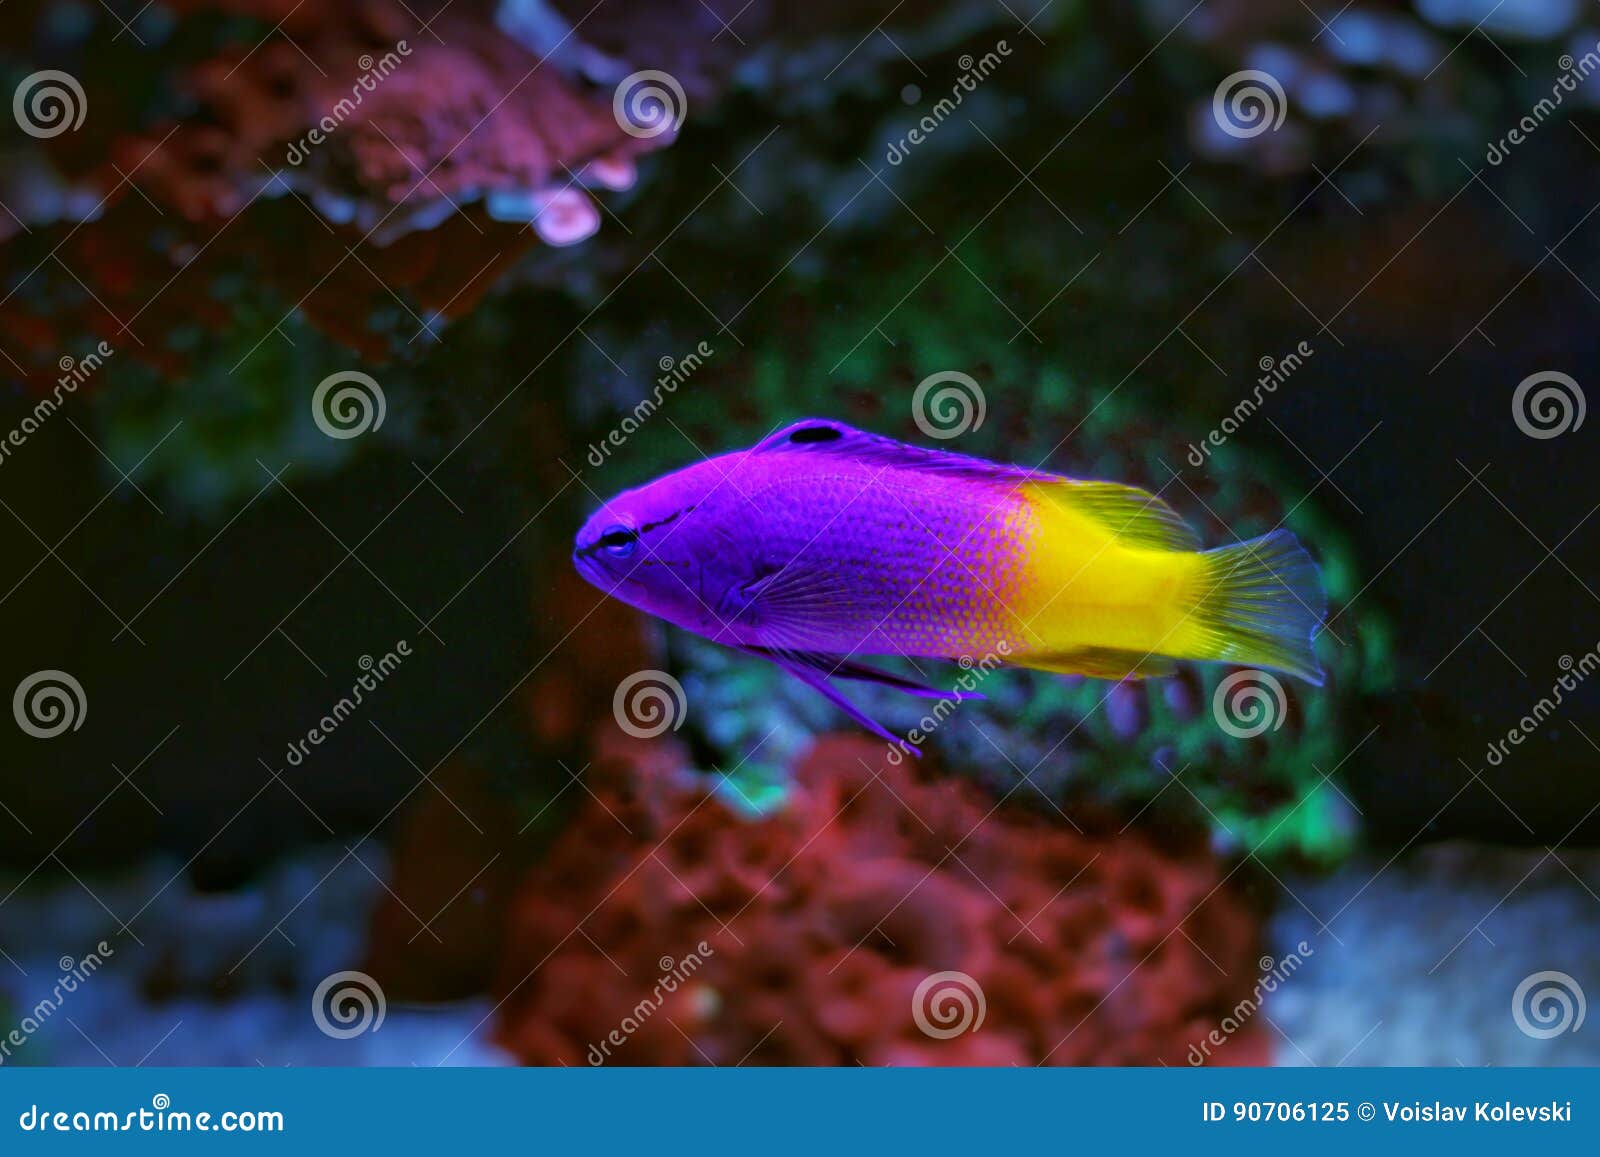 royal gramma aquarium fish